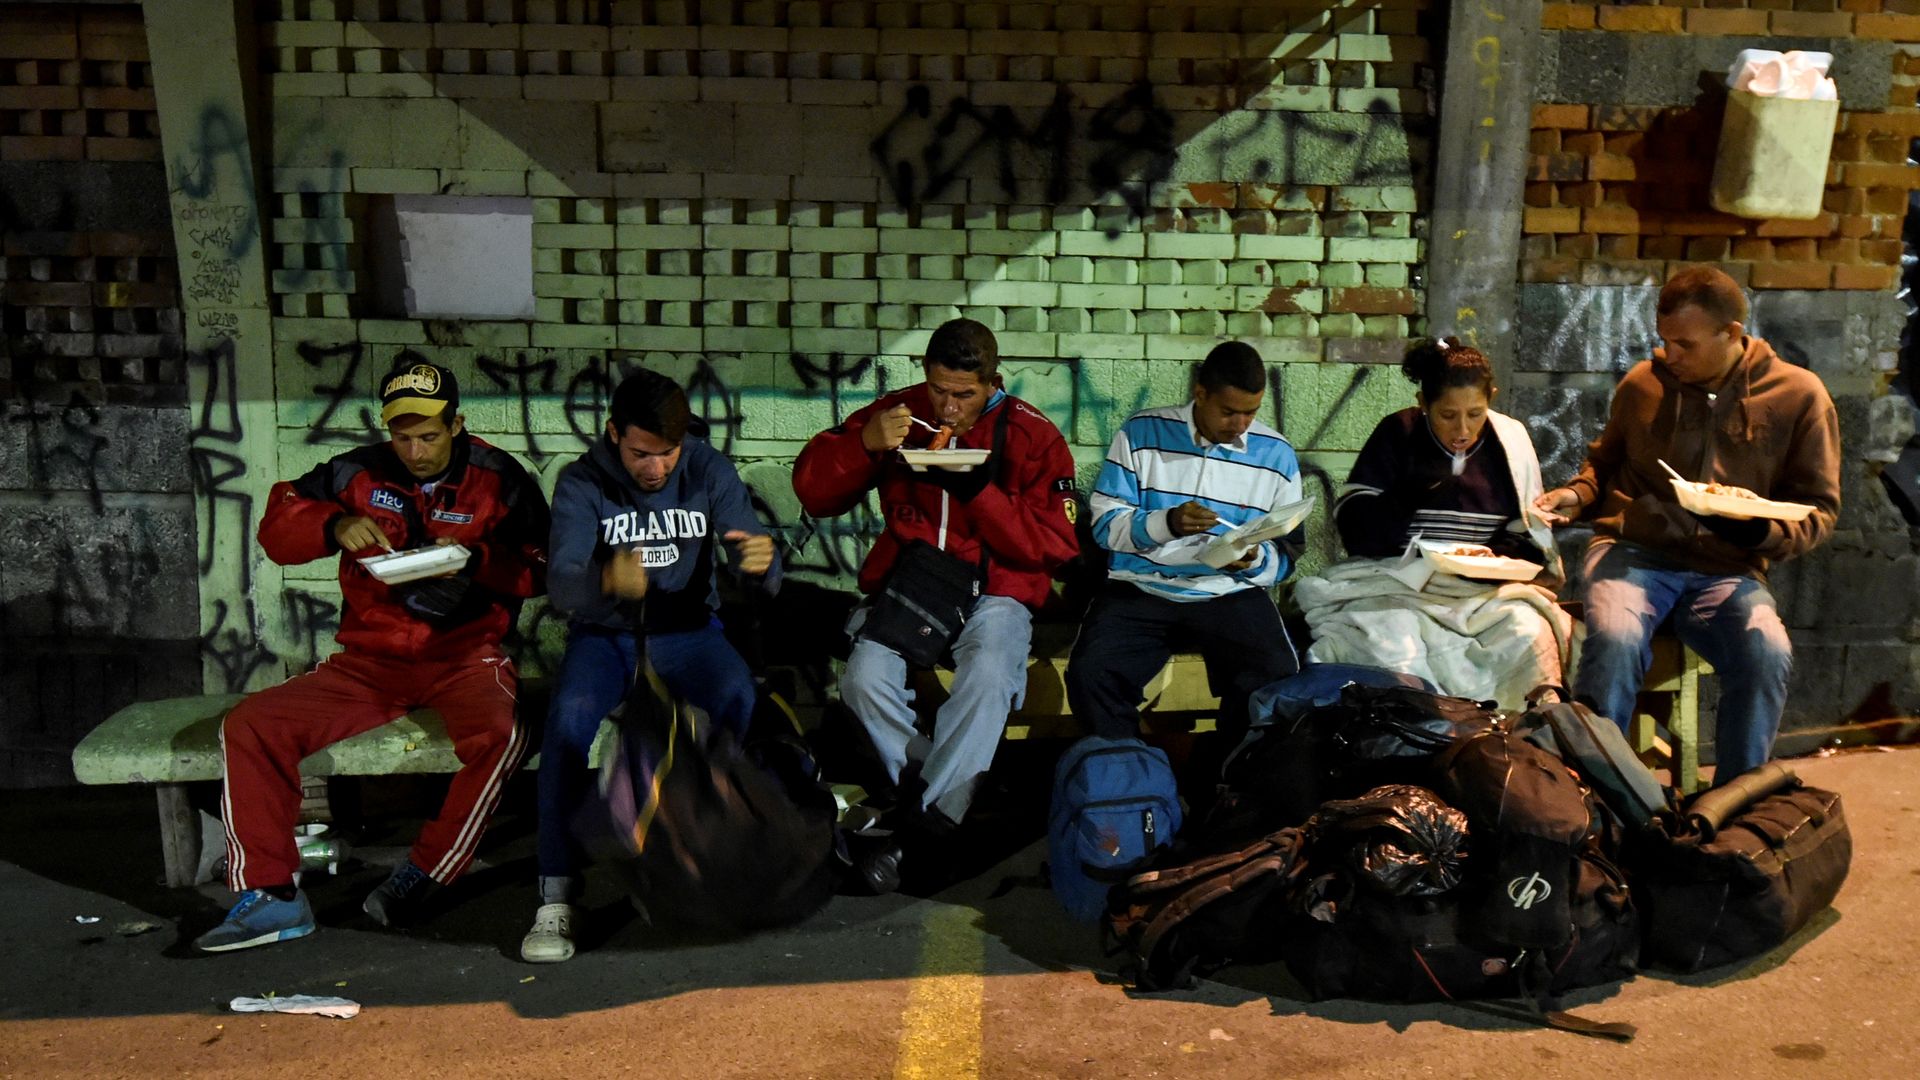 Venezuelan refugees eating in the street